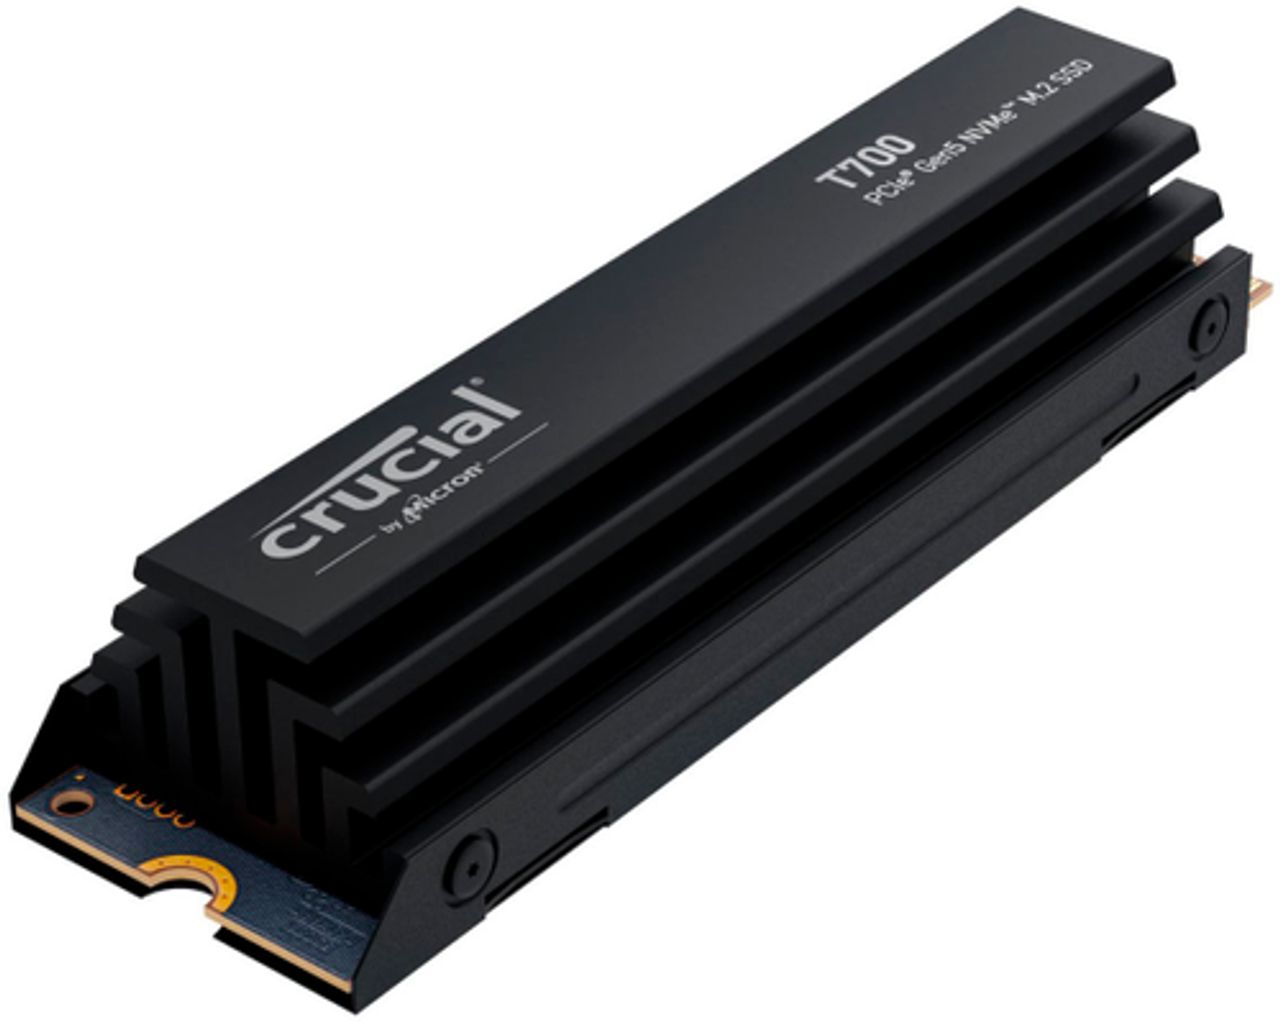 Crucial - T700 4TB PCIe Gen5 NVMe M.2 SSD with heatsink